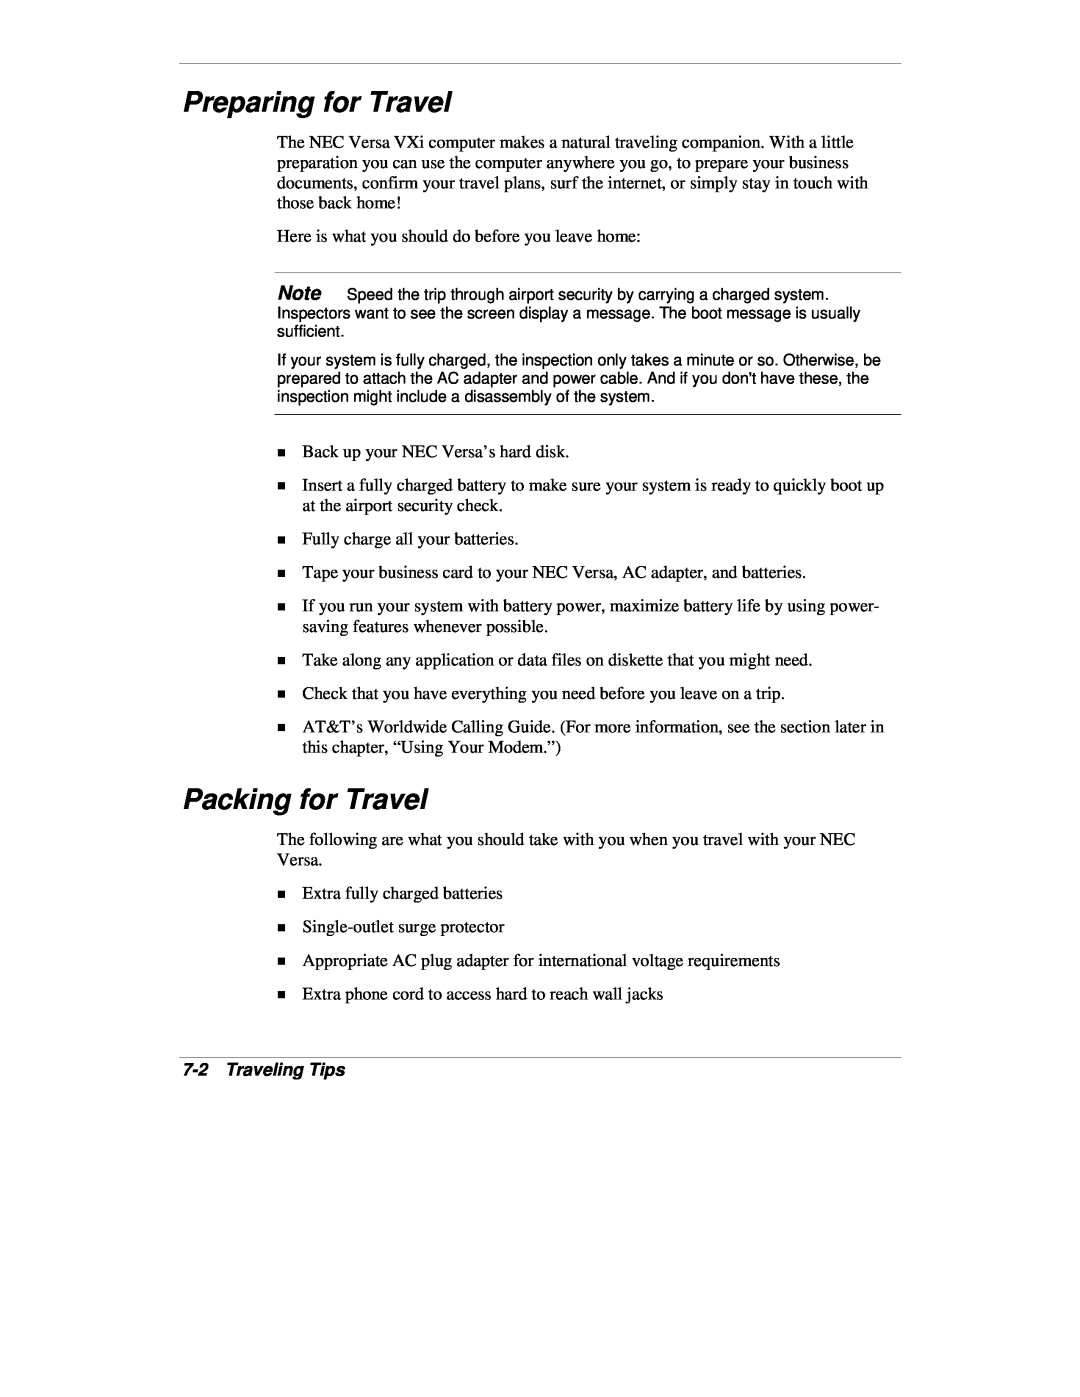 NEC VXi manual Preparing for Travel, Packing for Travel, 7-2Traveling Tips 